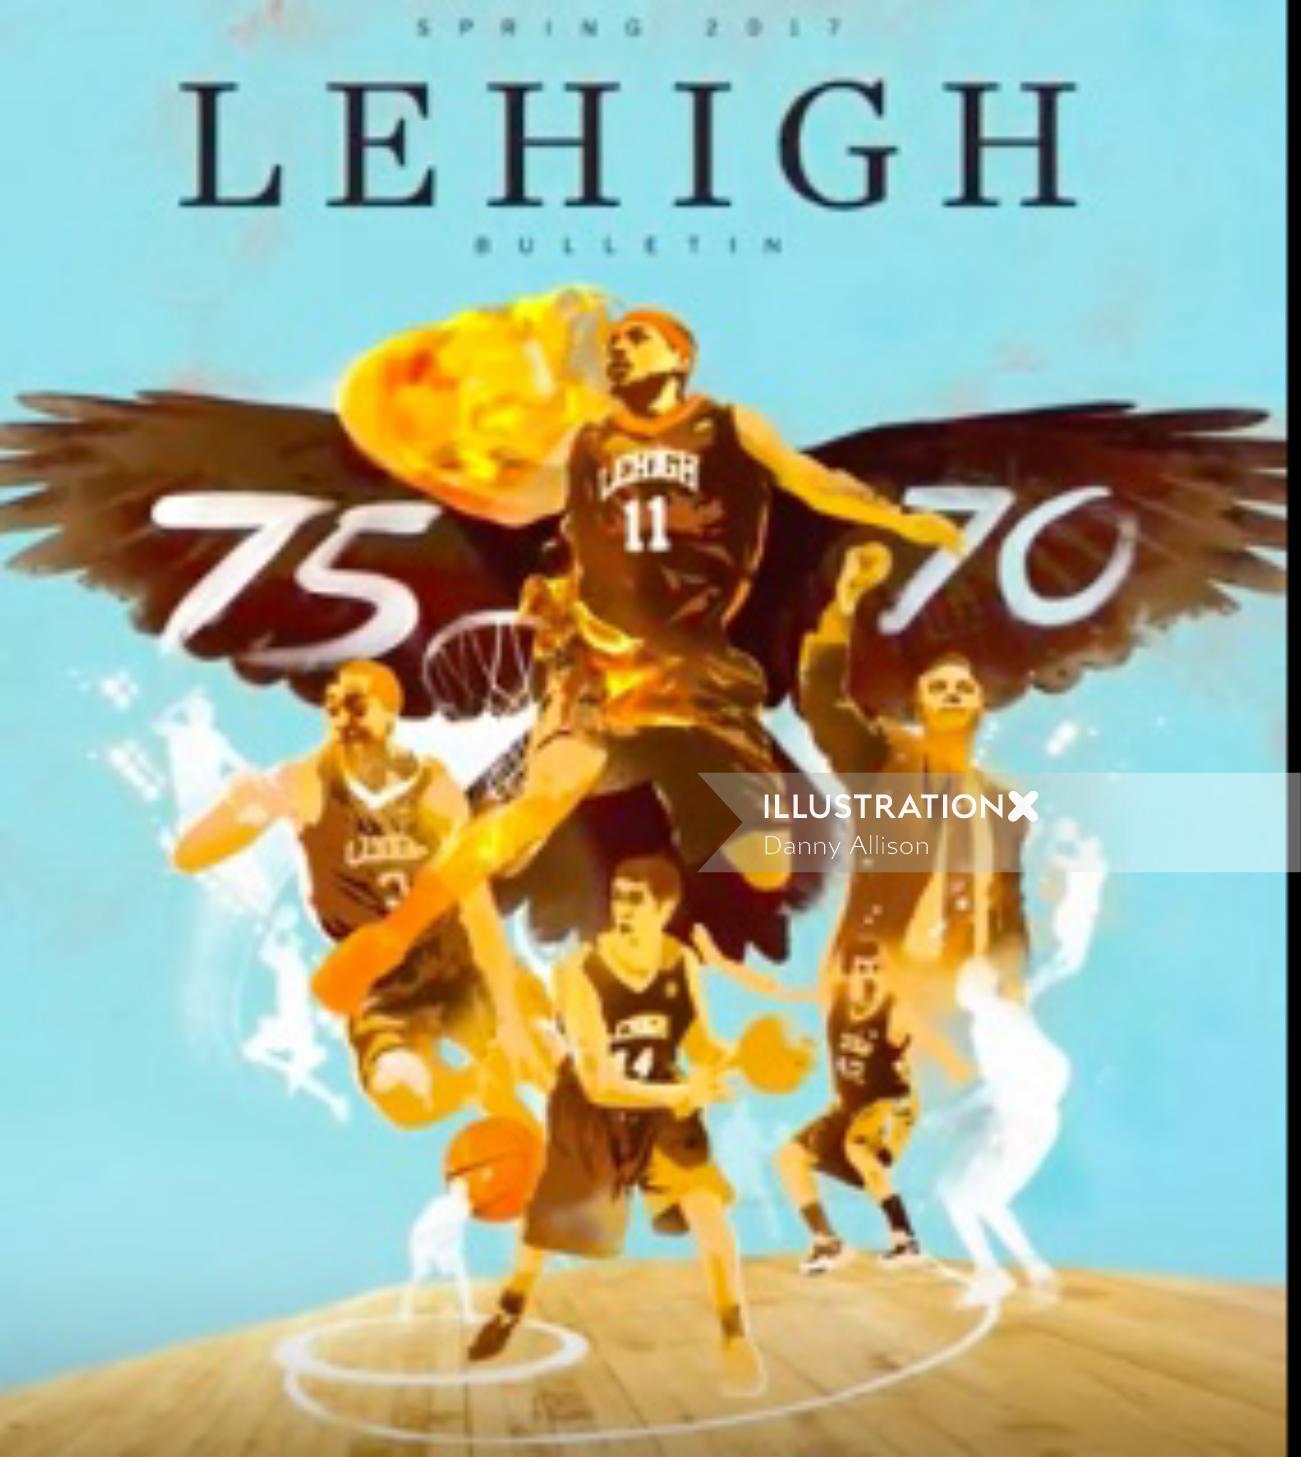 Sports & Fitness of  Lehigh Basket Ball Team Poster

